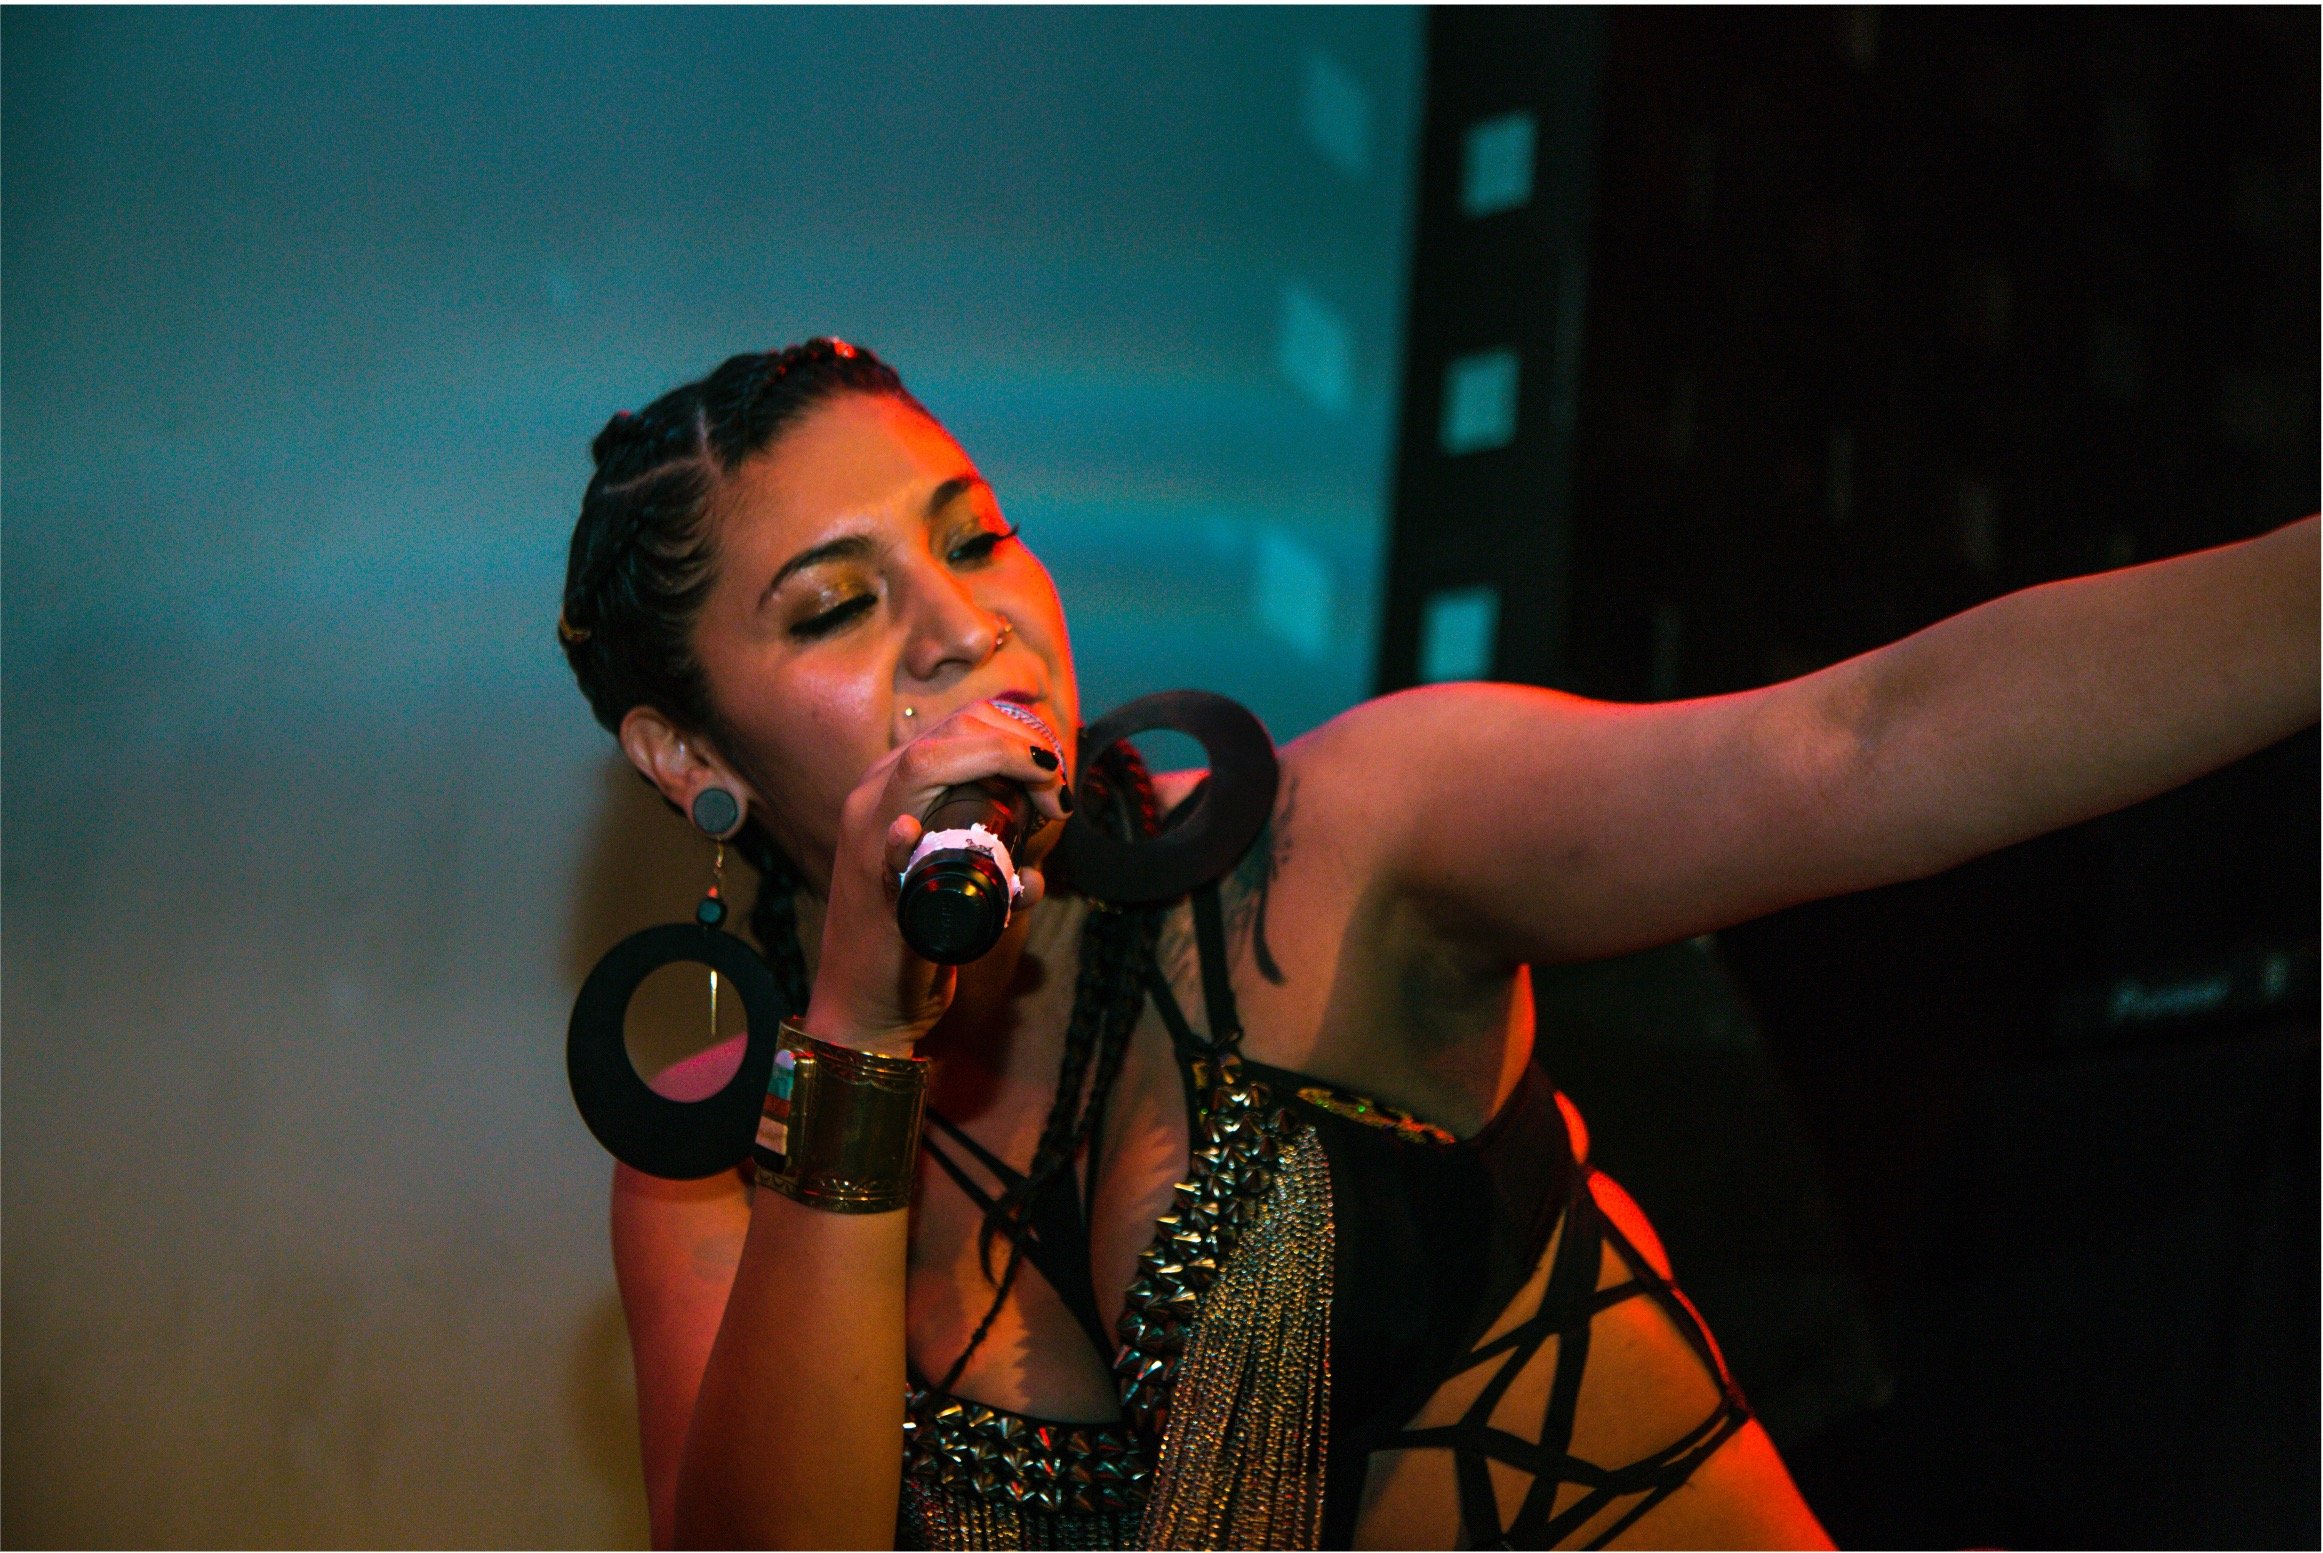  Micaela aka Aela-Hopeful-Monster performing.  